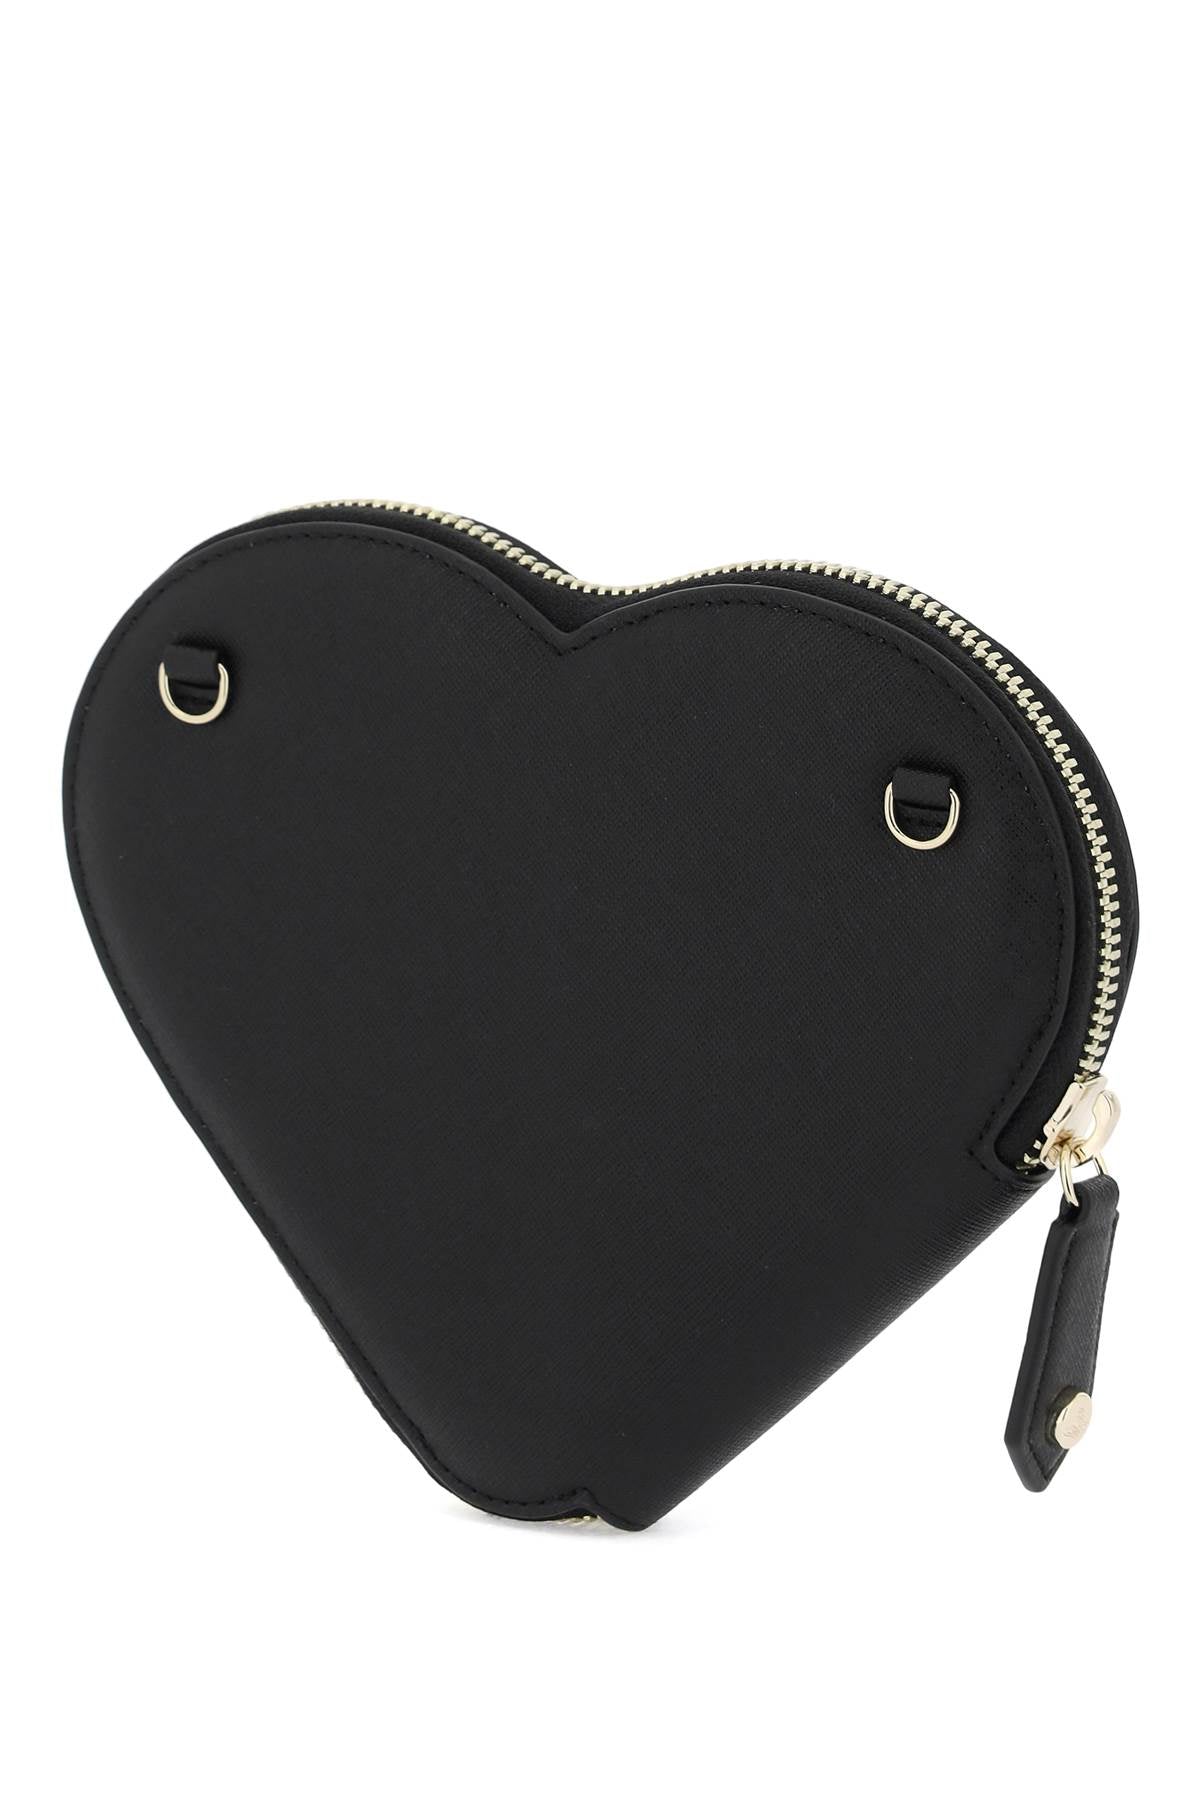 heart-shaped crossbody bag-1